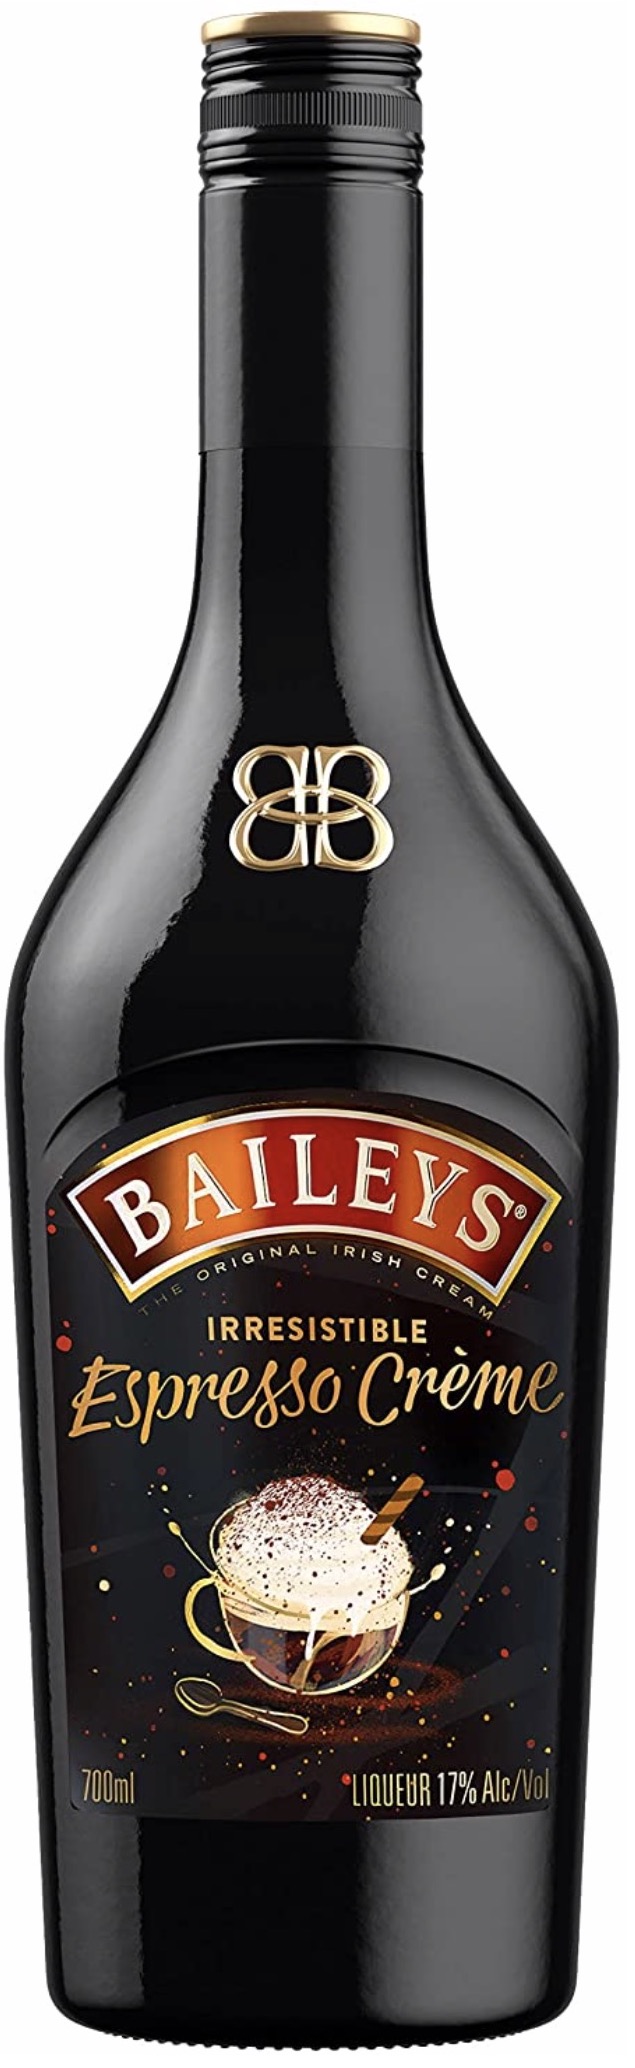 Baileys Espresso Crème, Irish Cream Likör, 17% vol. 0,7l